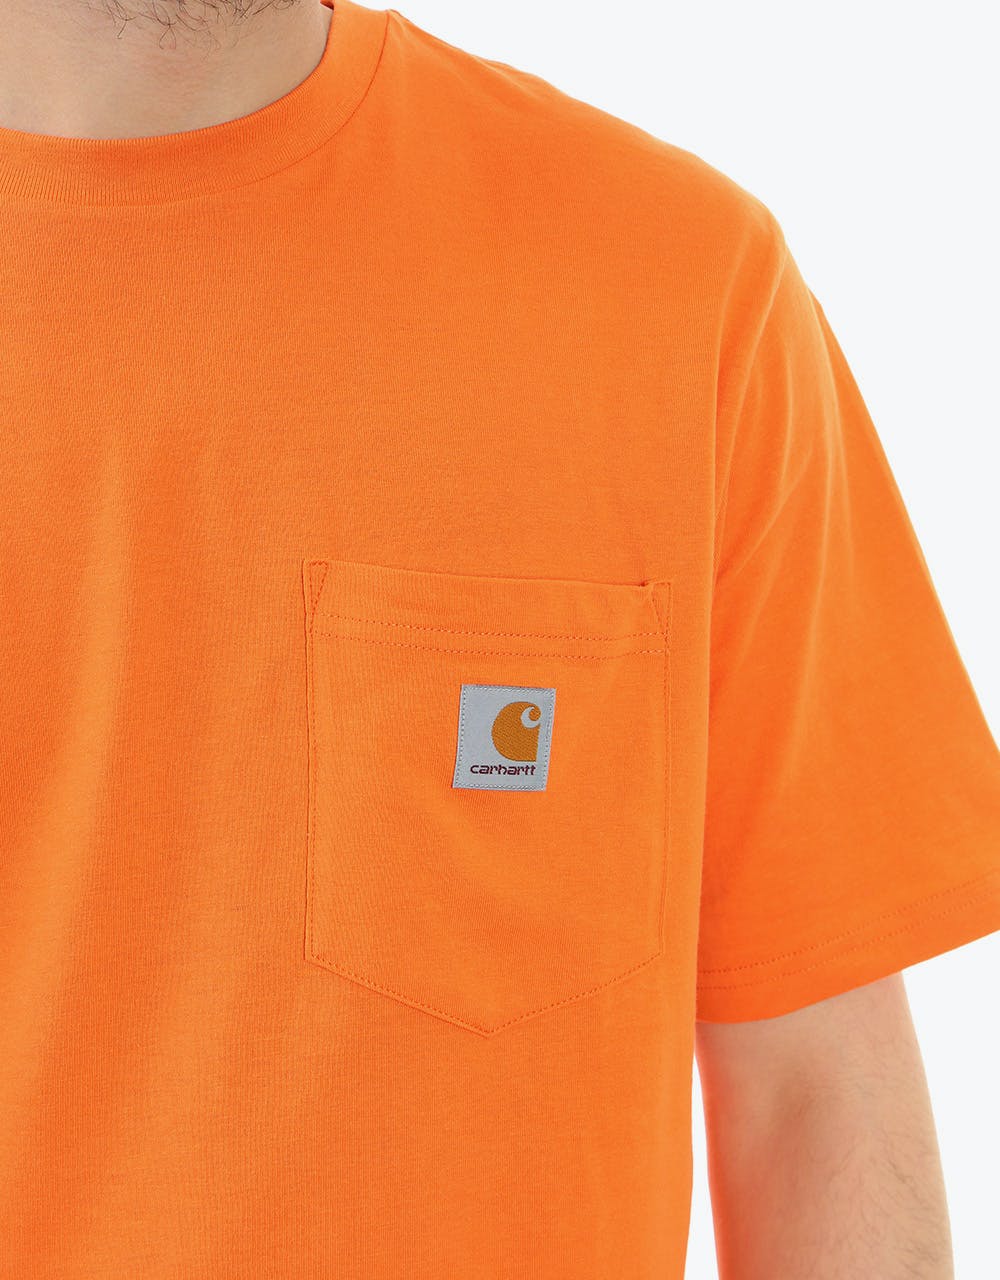 Carhartt WIP S/S Pocket T-Shirt - Clockwork